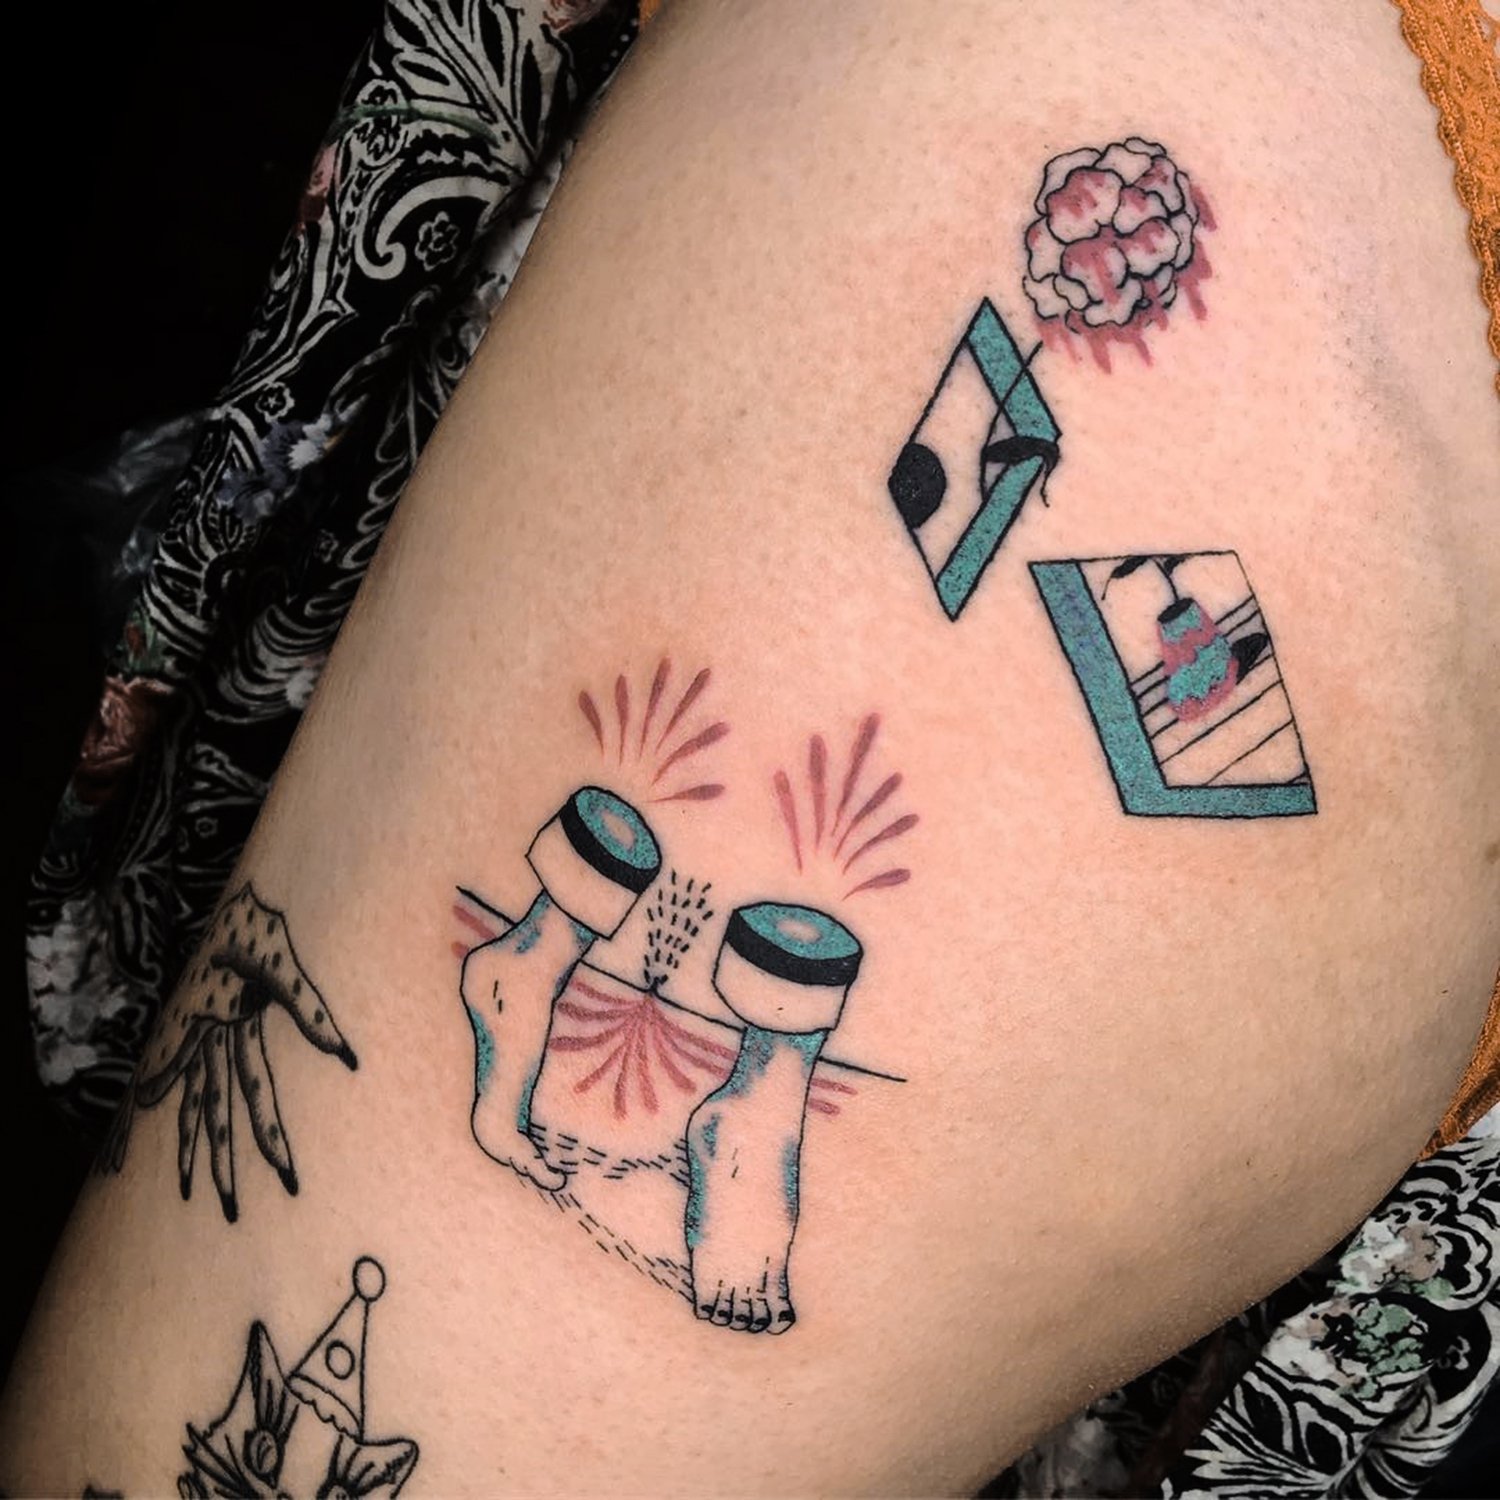 assortment of small tattoos